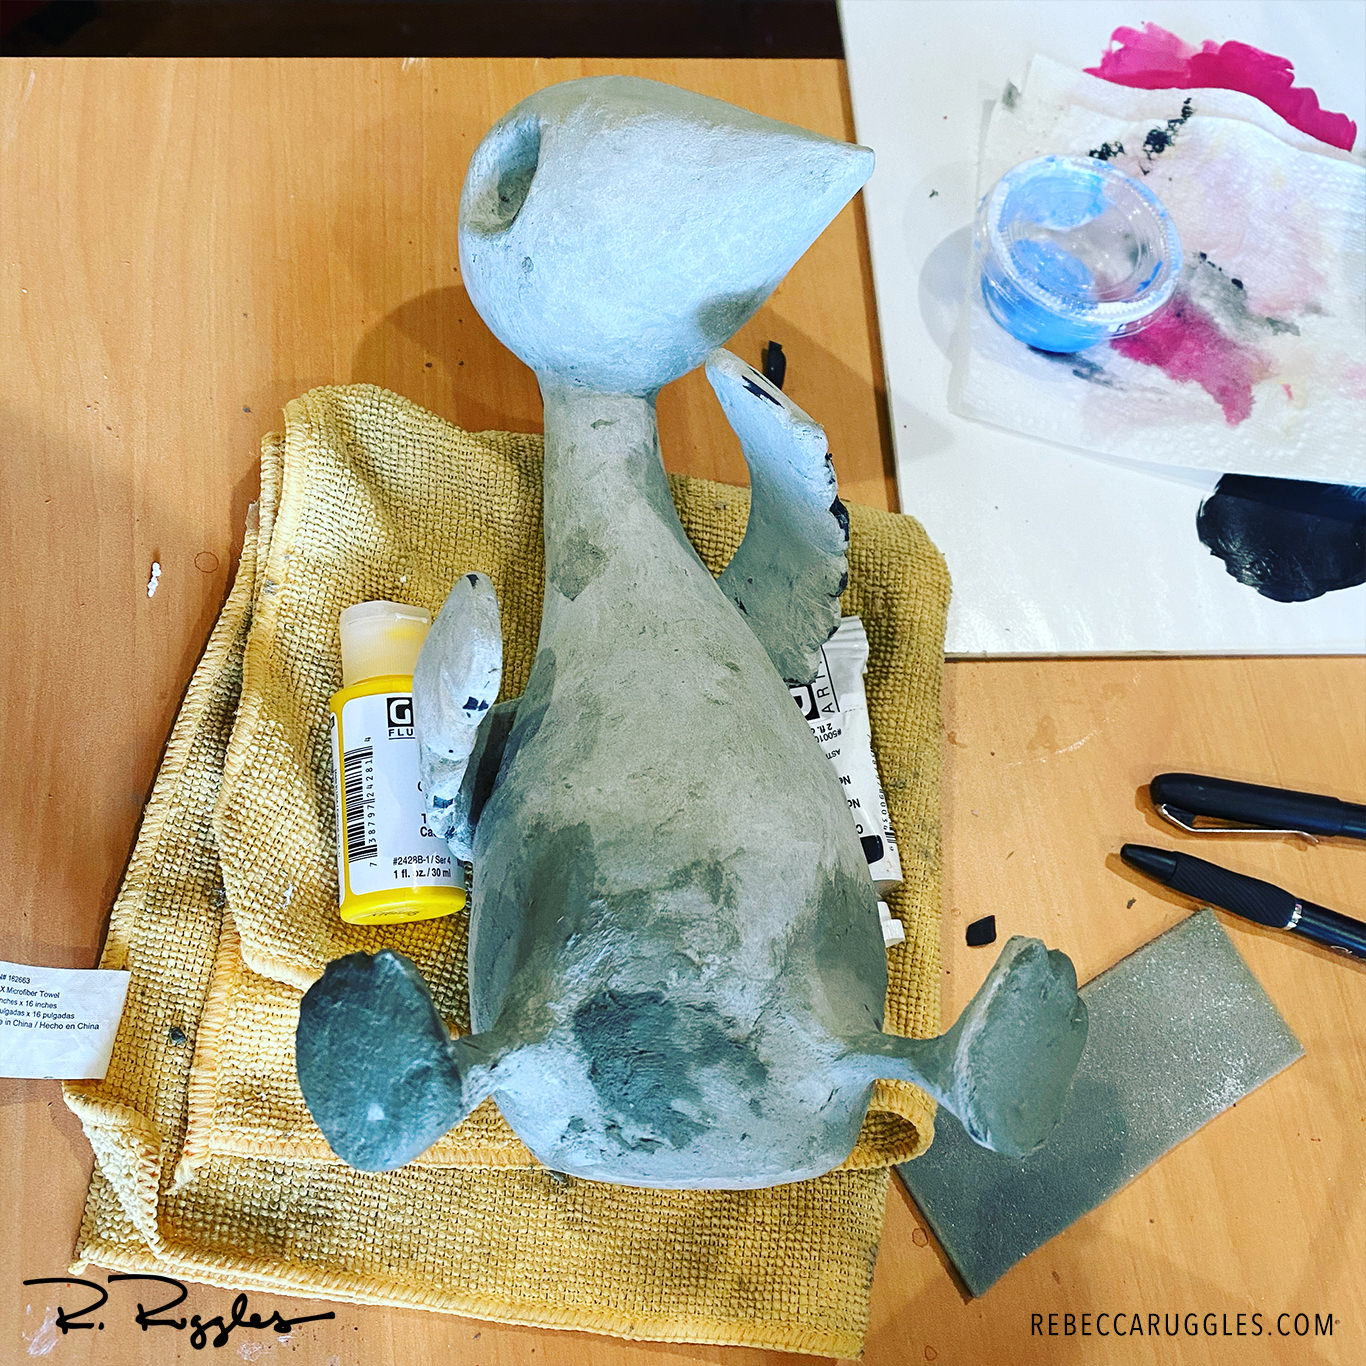 Baby bird sculpture in progress. Sculpting the feet, by artist Rebecca Ruggles.